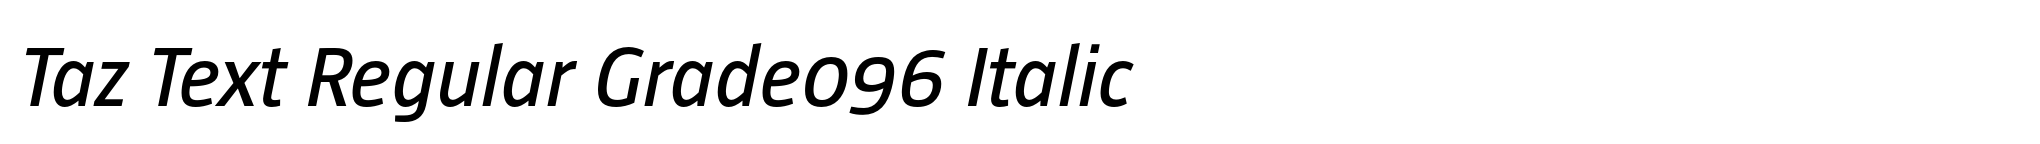 Taz Text Regular Grade096 Italic image